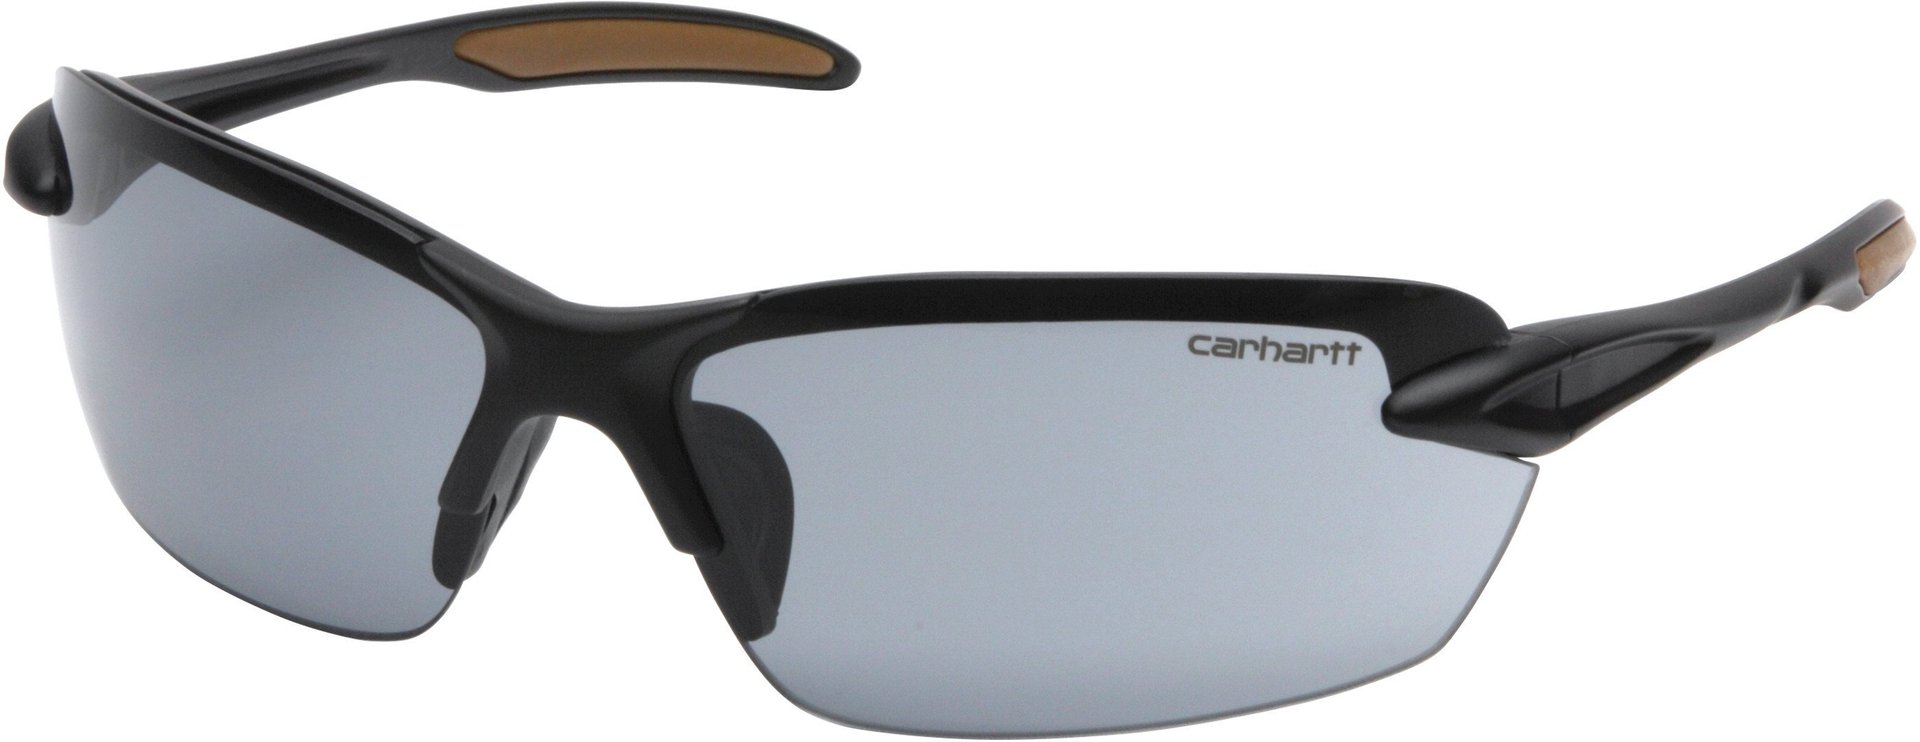 Carhartt Spokane Safety Glasses, grey, grey